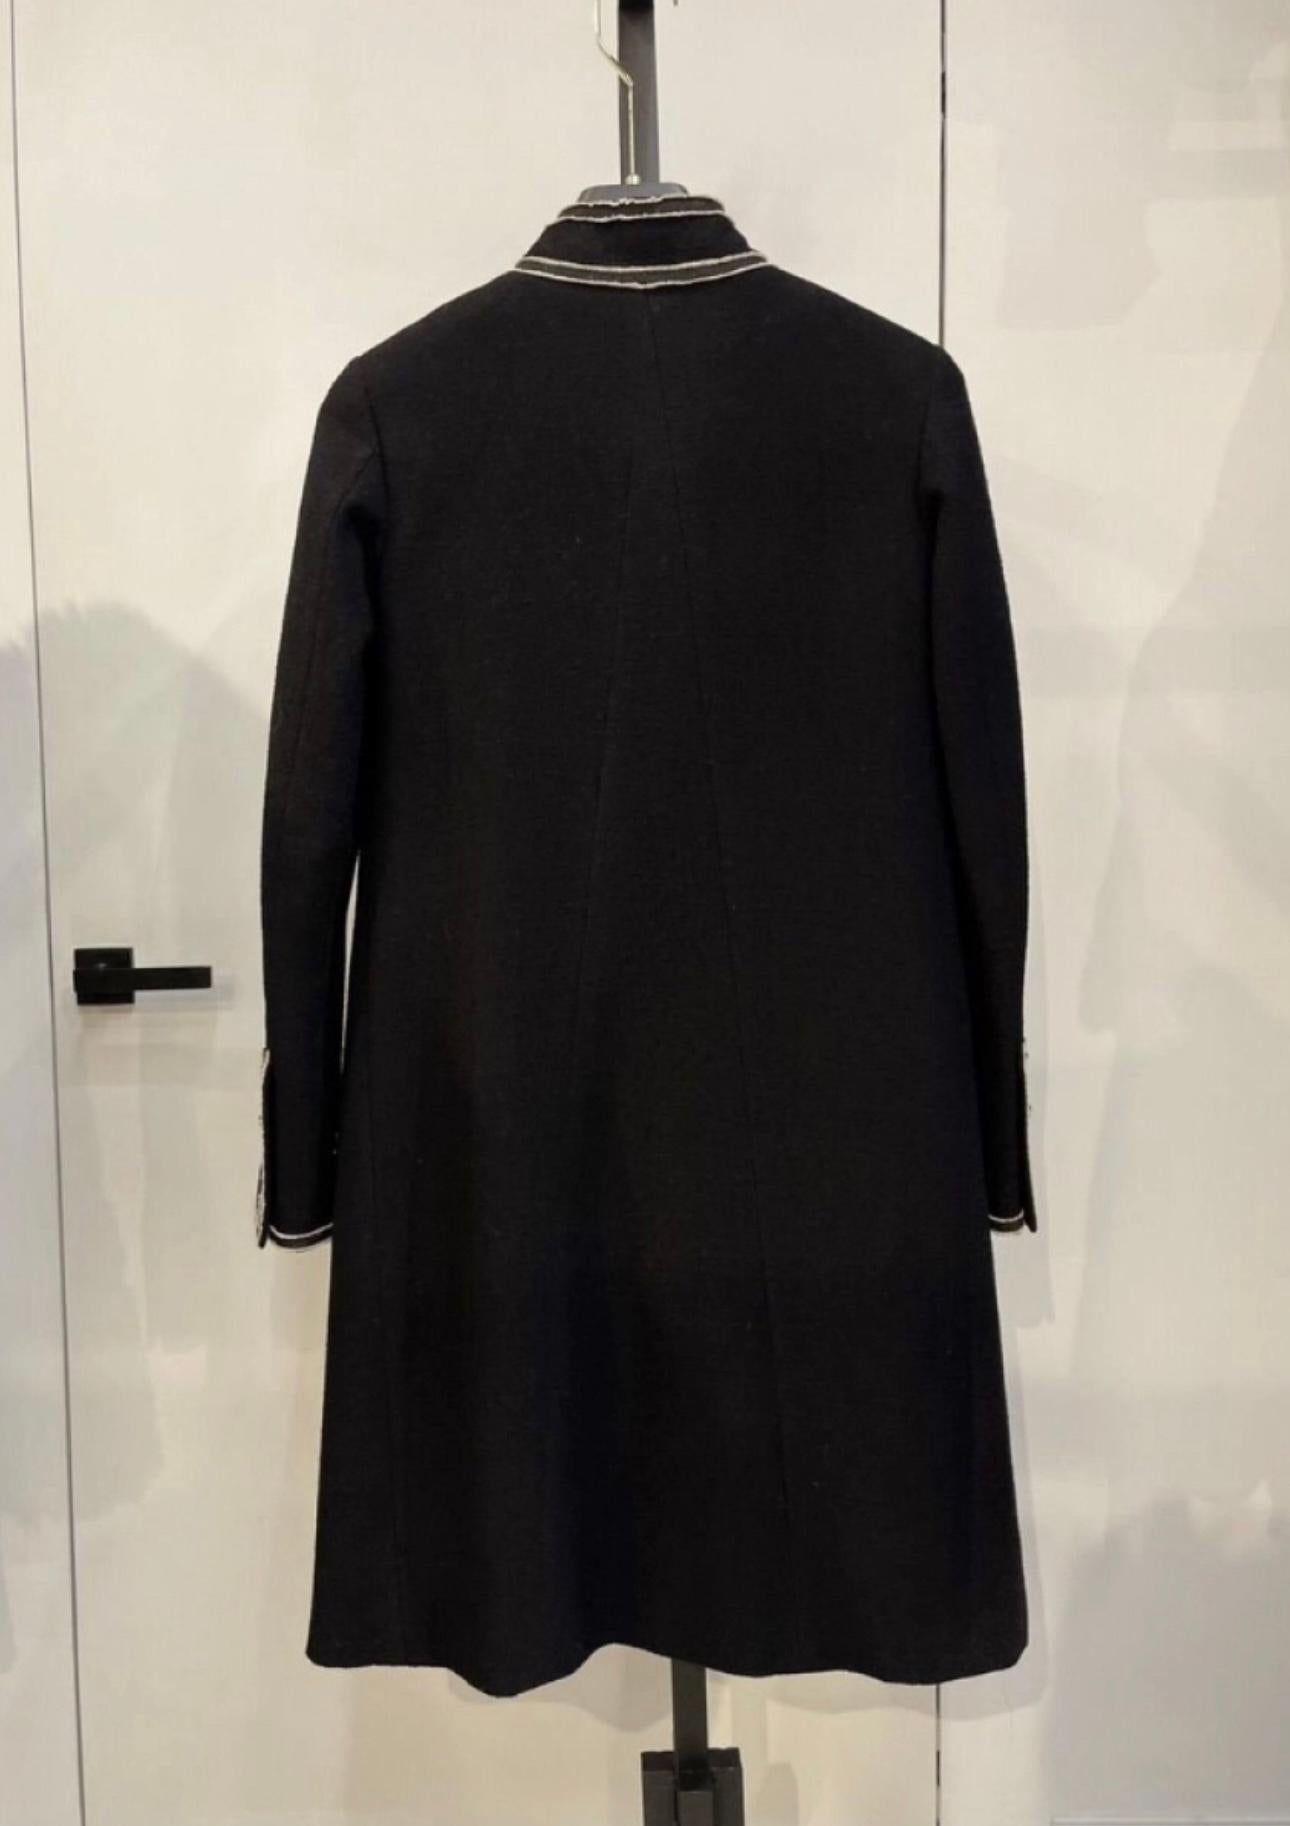 Chanel CC Buttons Paris / Singapore Runway Black Tweed Coat 13